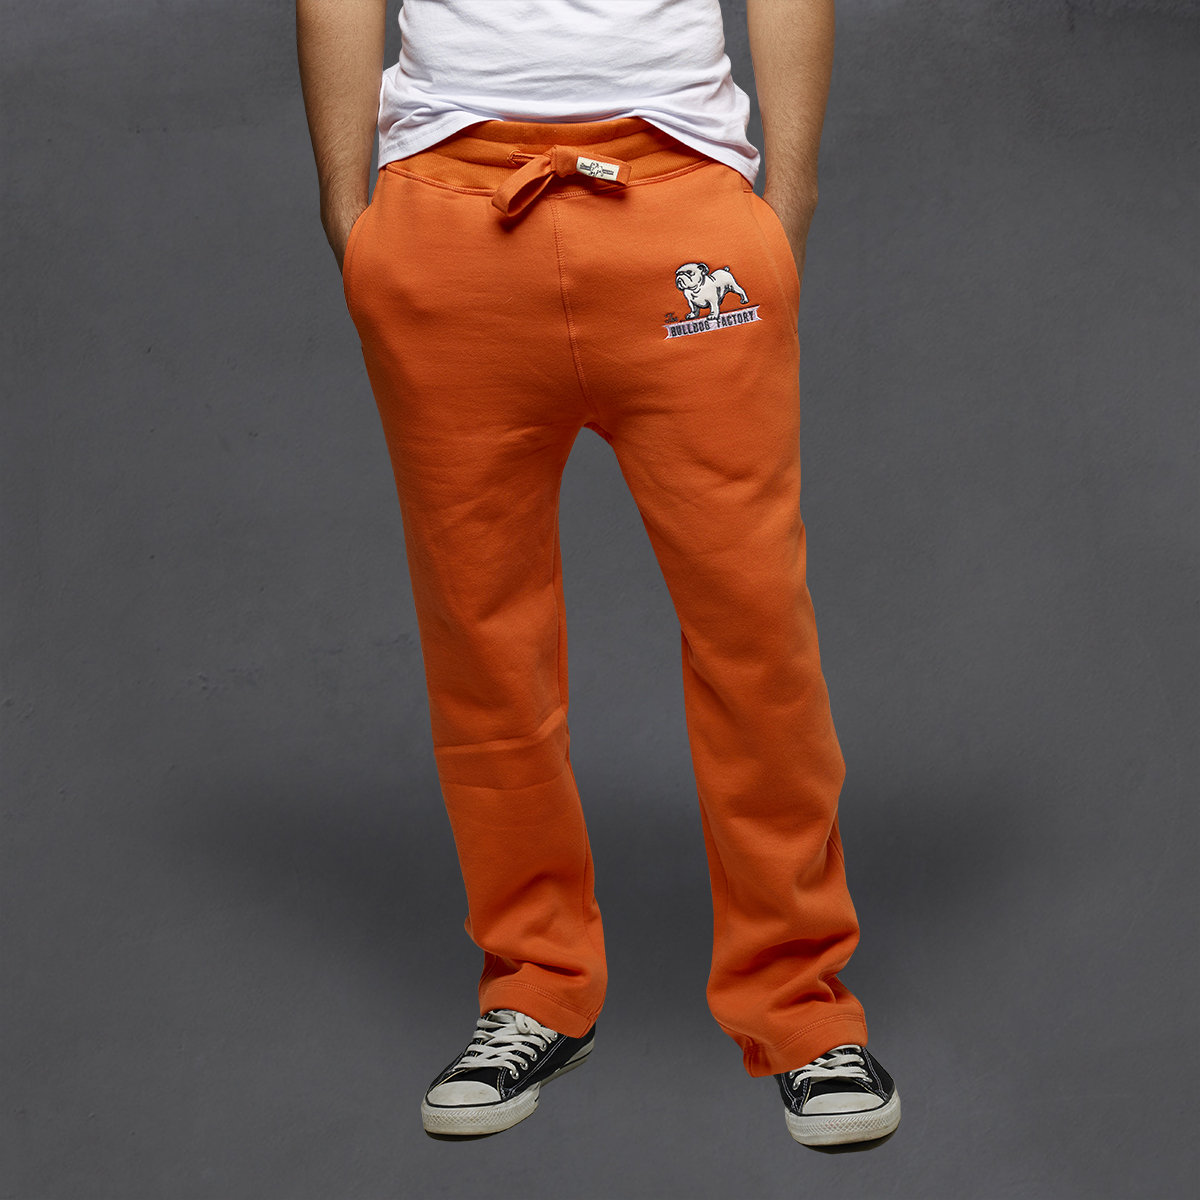 Guys Heritage Sweatpants - Celosia Orange